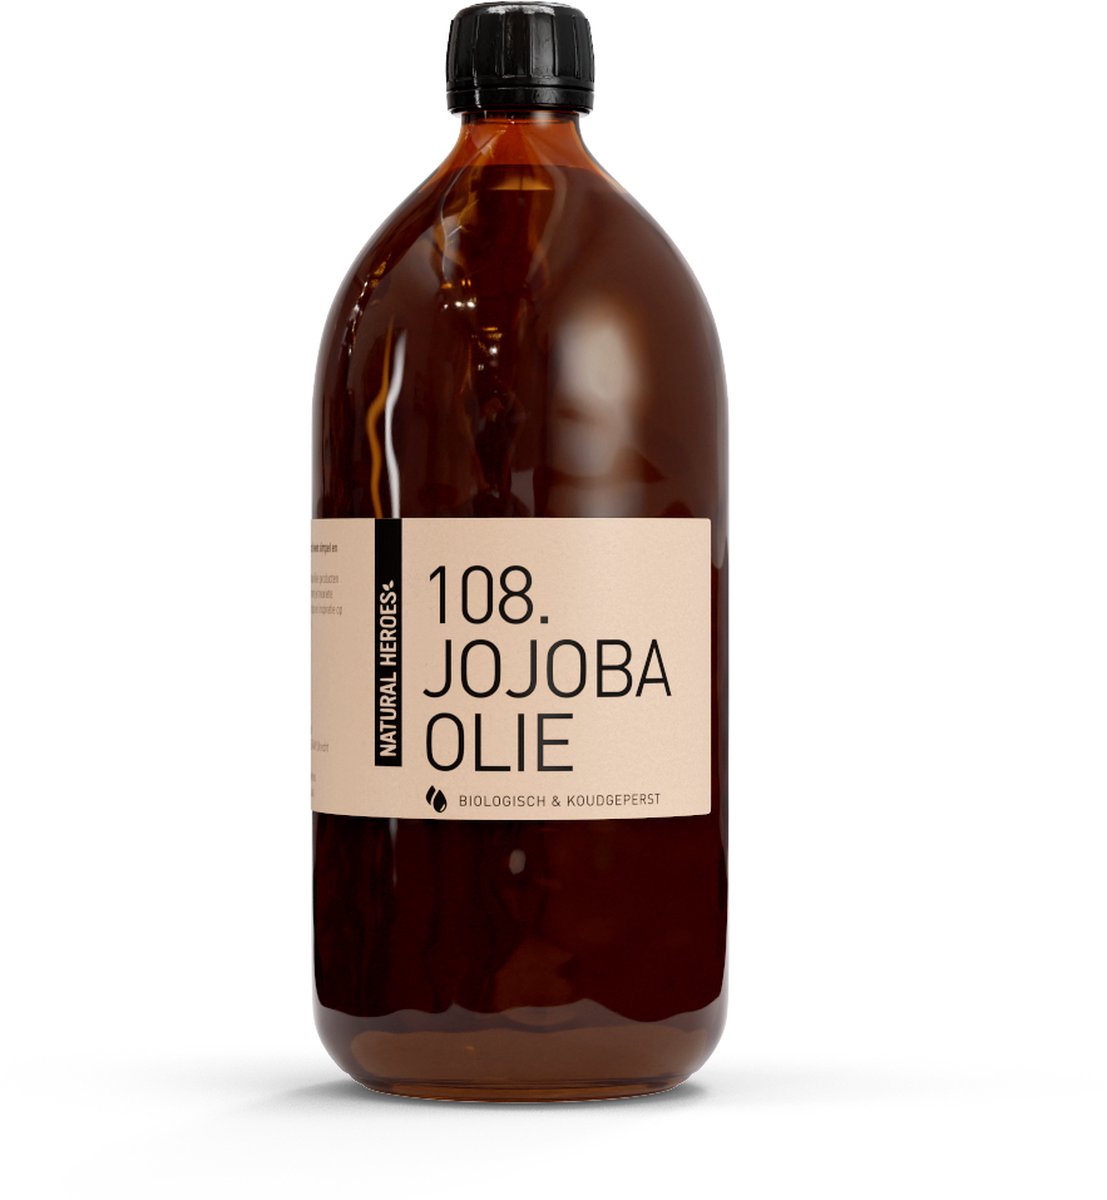 Jojoba Olie (Biologisch & Koudgeperst) - 100 ml